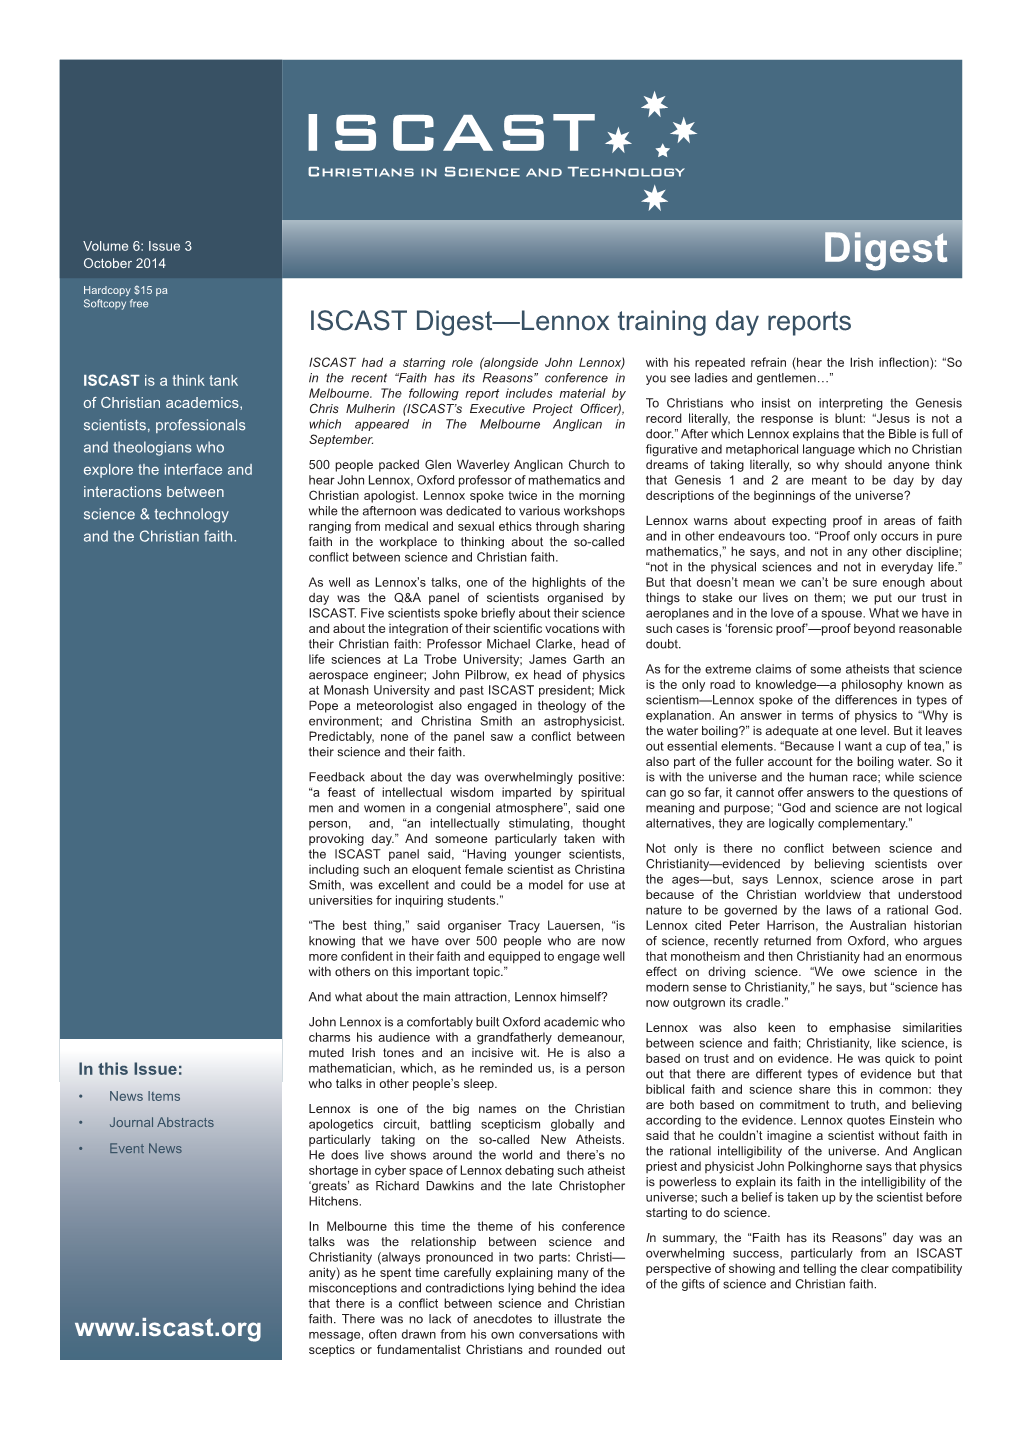 Digest Hardcopy $15 Pa Softcopy Free ISCAST Digest—Lennox Training Day Reports